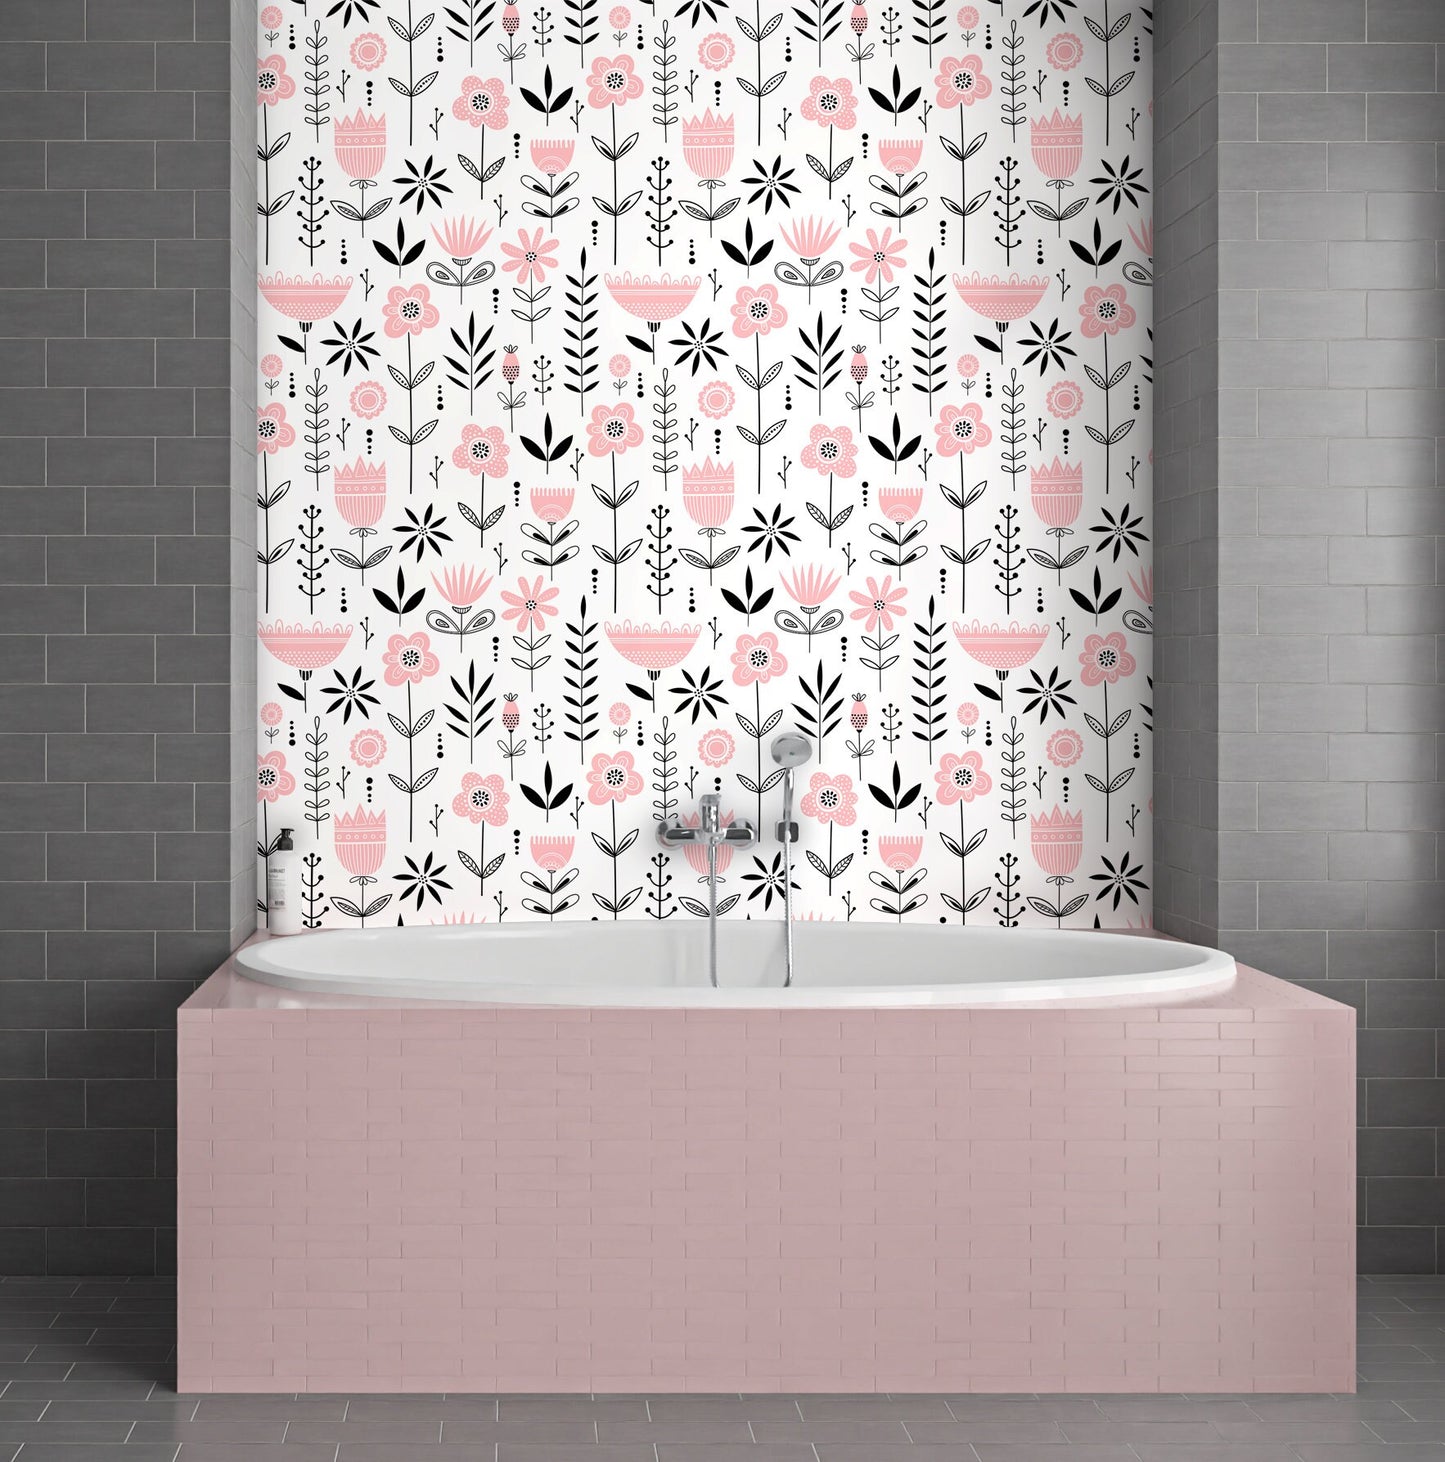 Pink Floral Wallpaper Peel and Stick, Scandinavian Wallpaper, Kids Room Wallpaper, Removable Wall Paper